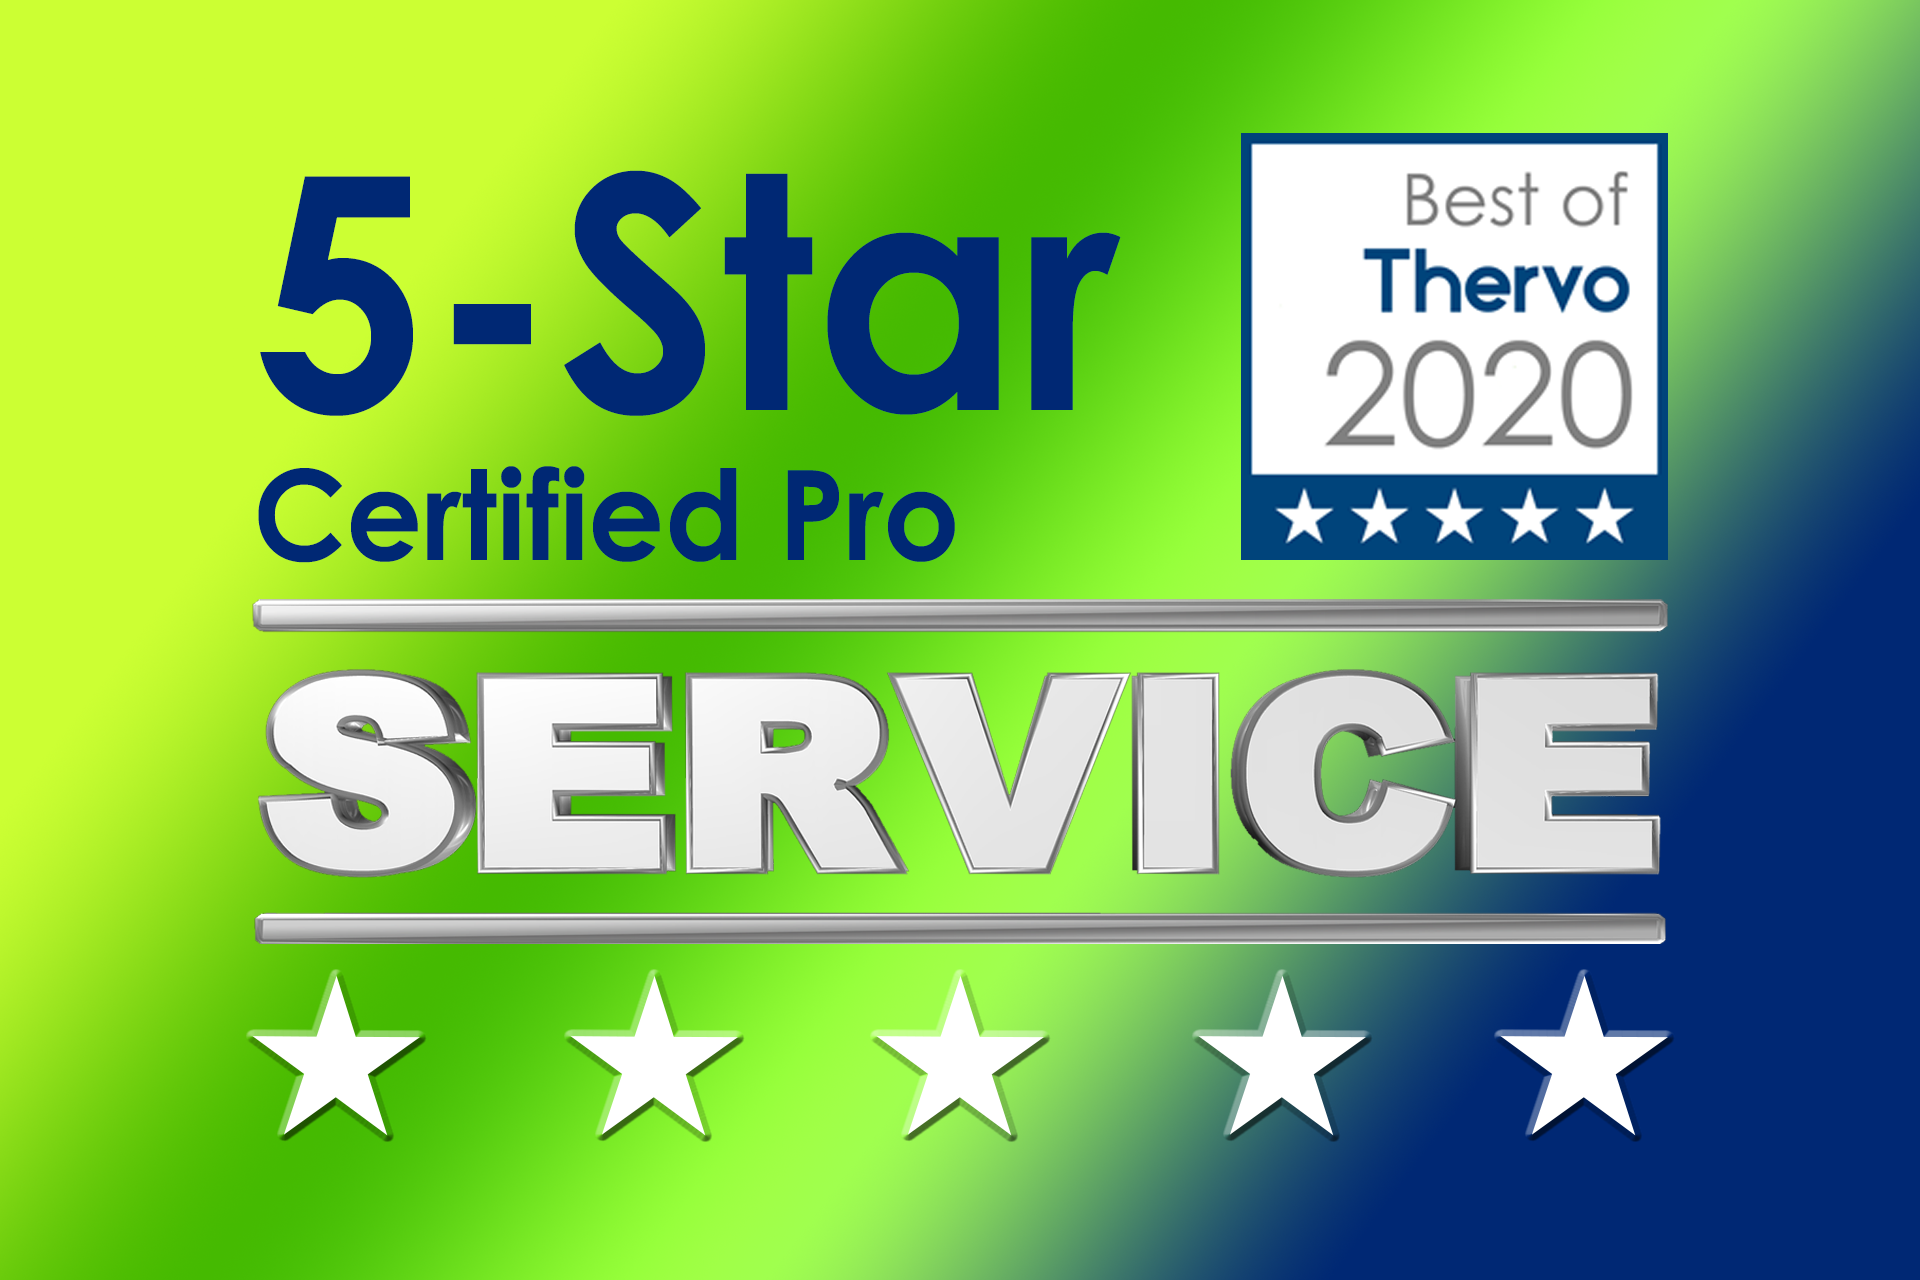 5-Star Certified Pro Best of Thervo 2020 - JRB Team